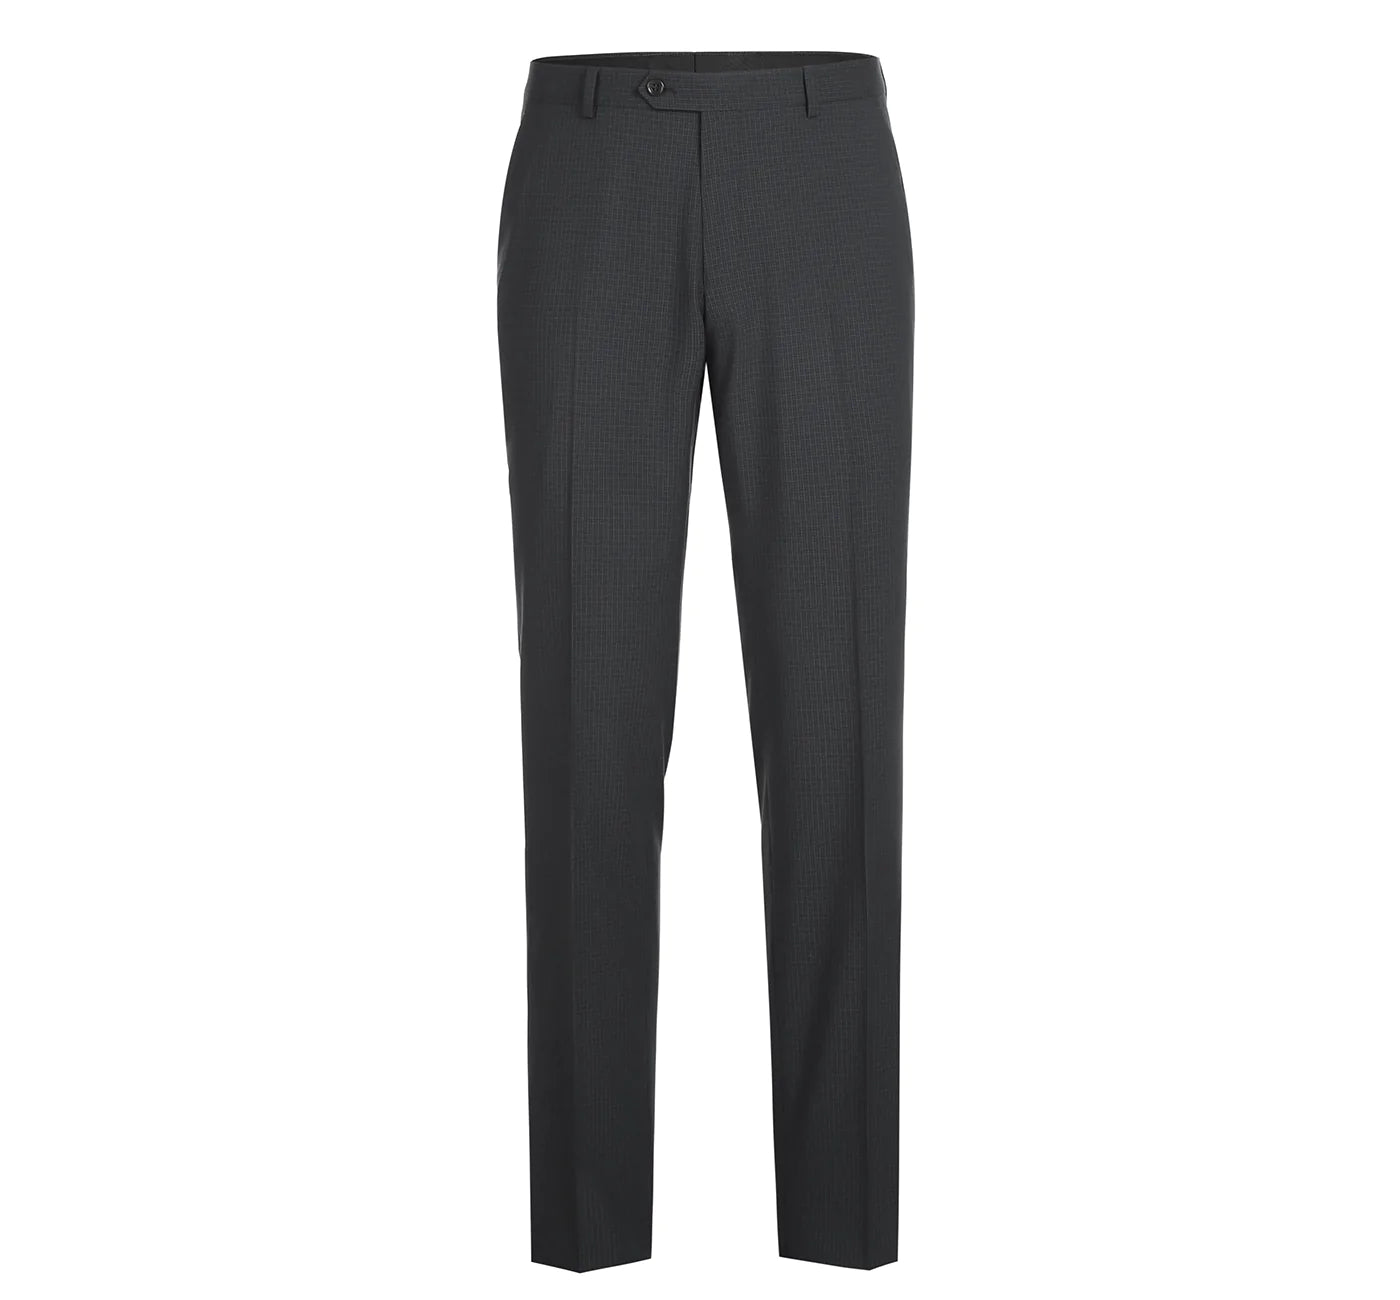 Charcoal Grey Stretch Wool Pants - Hangrr